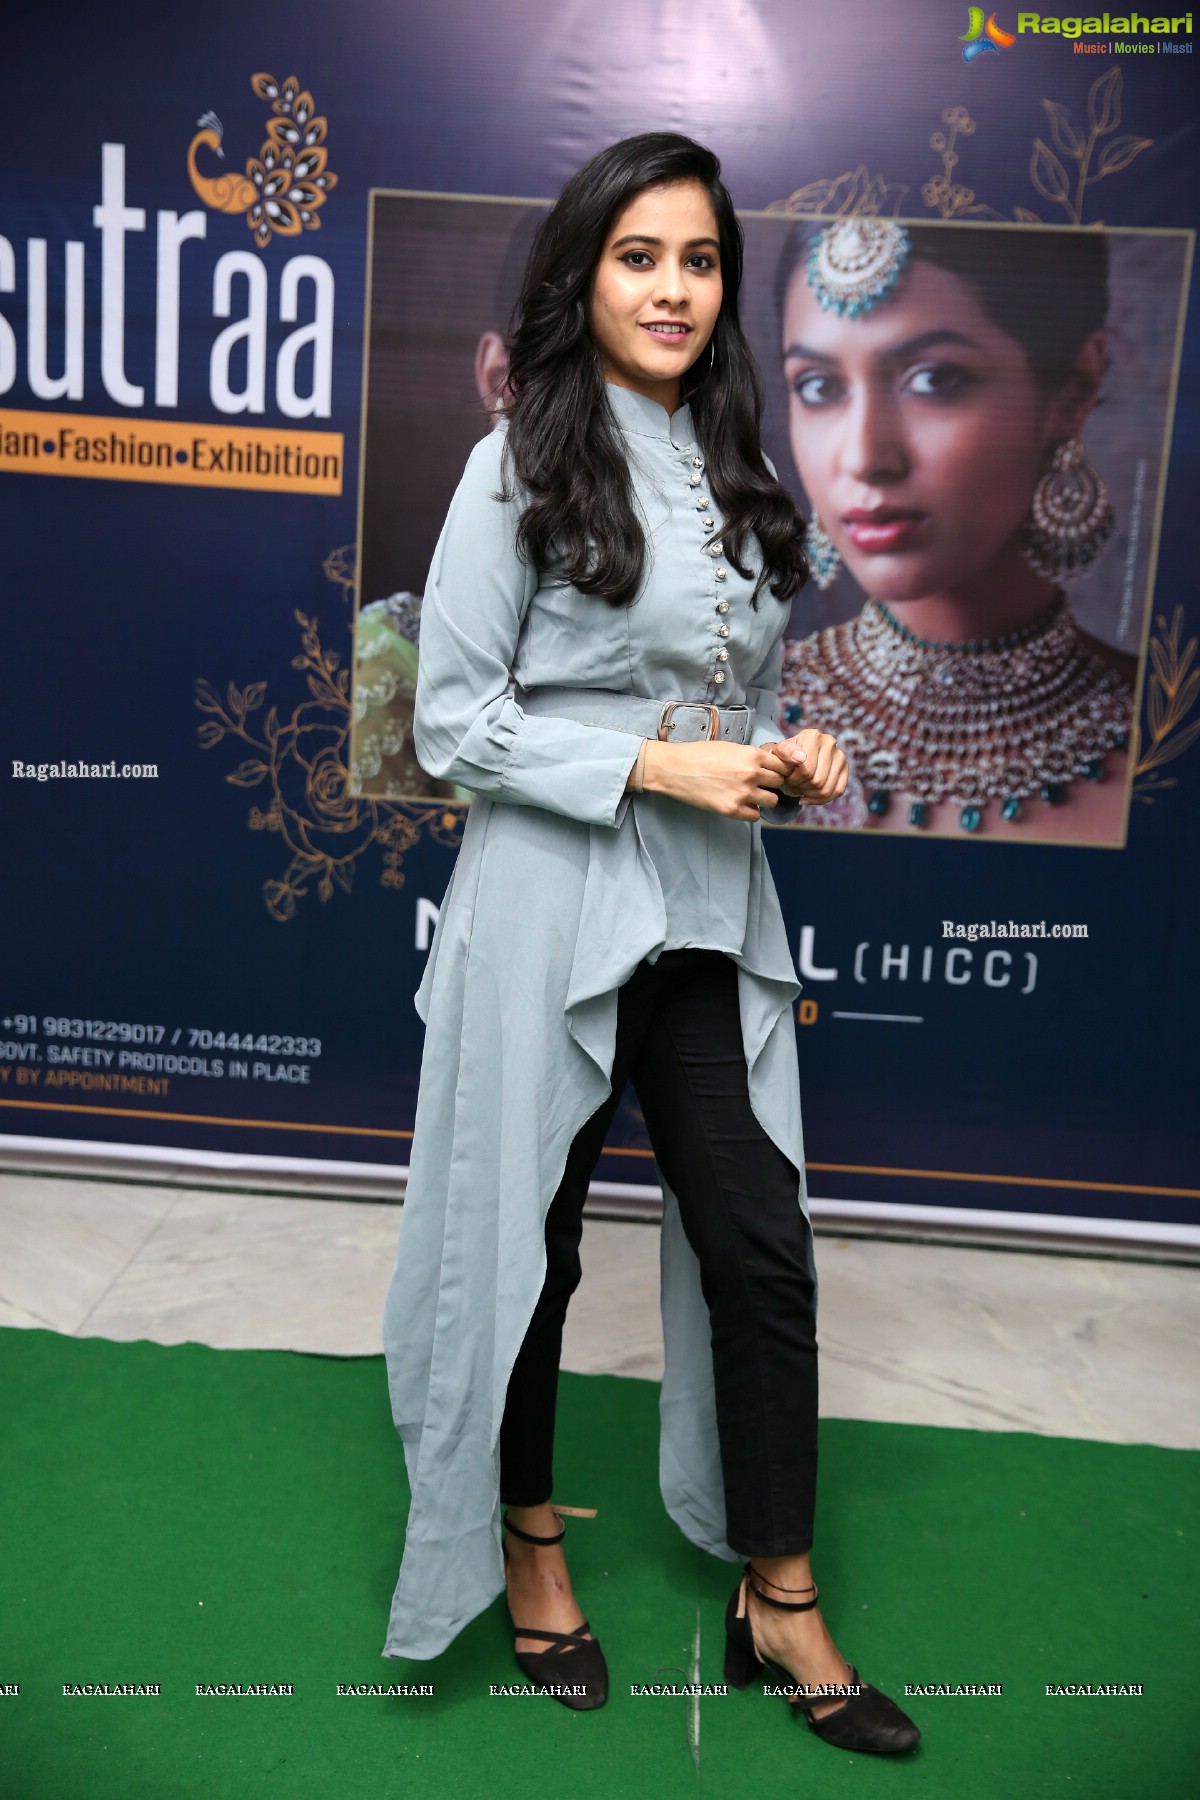 Sutraa Fashion & Lifestyle Exhibition December 2020 Curtain Raiser